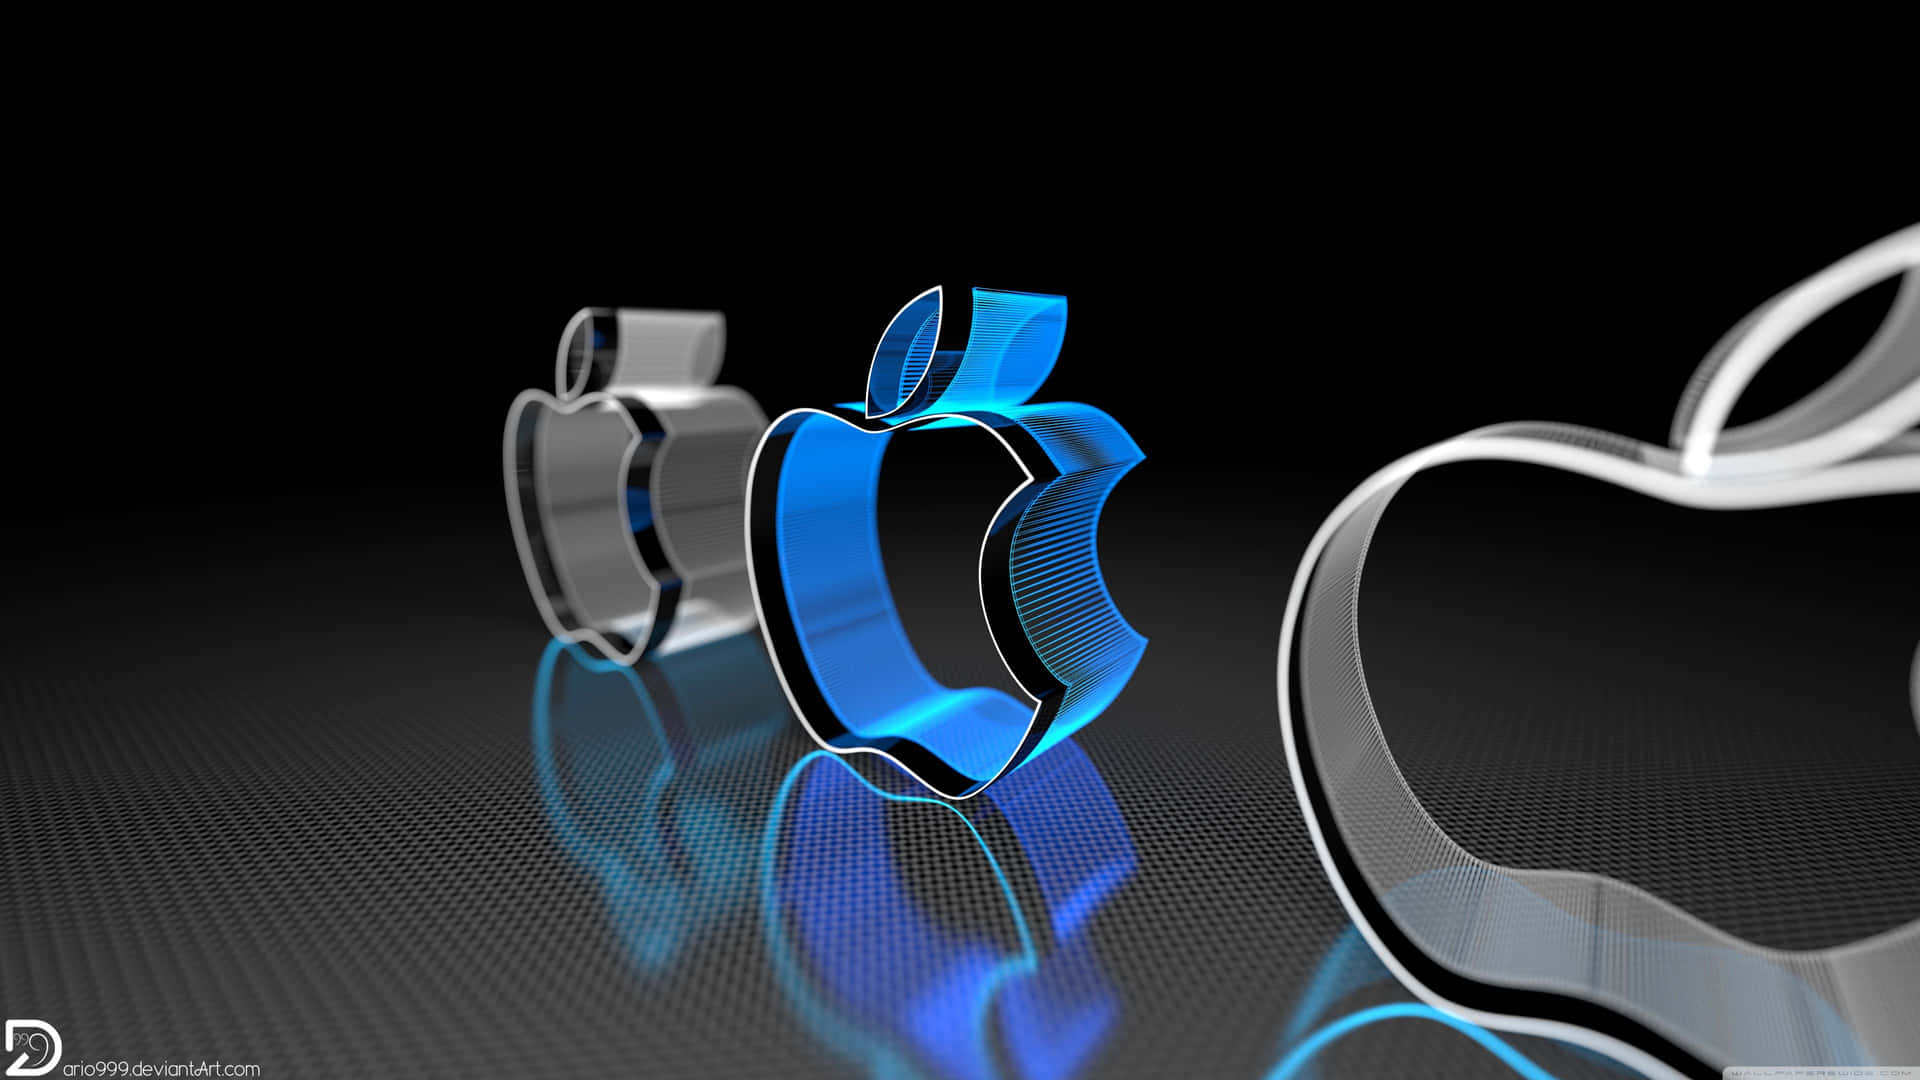 Apple Logos On A Black Background